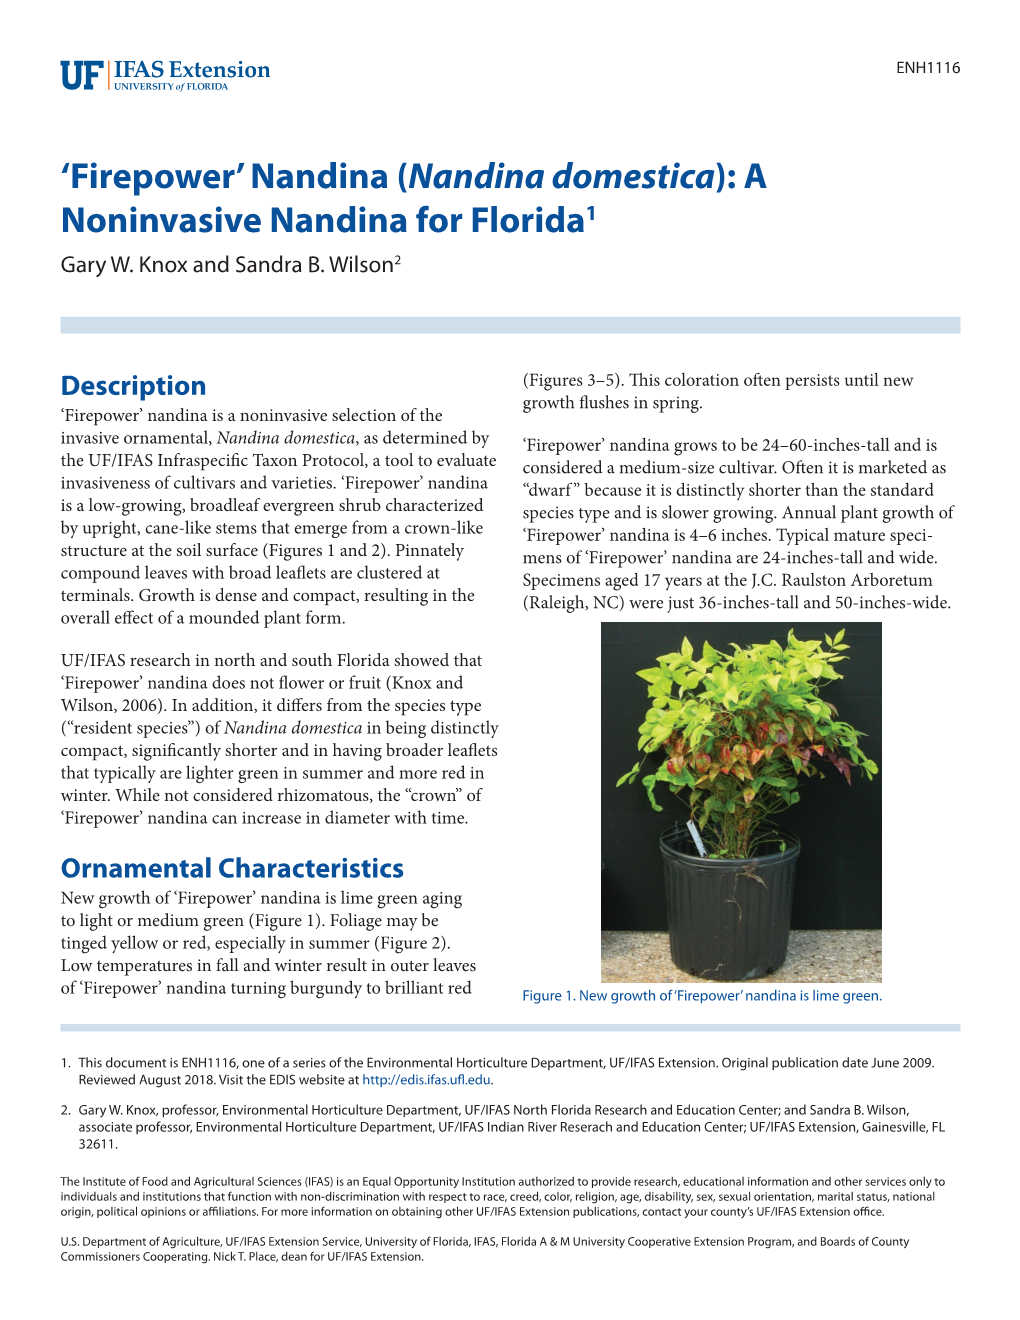 Nandina Domestica): a Noninvasive Nandina for Florida1 Gary W